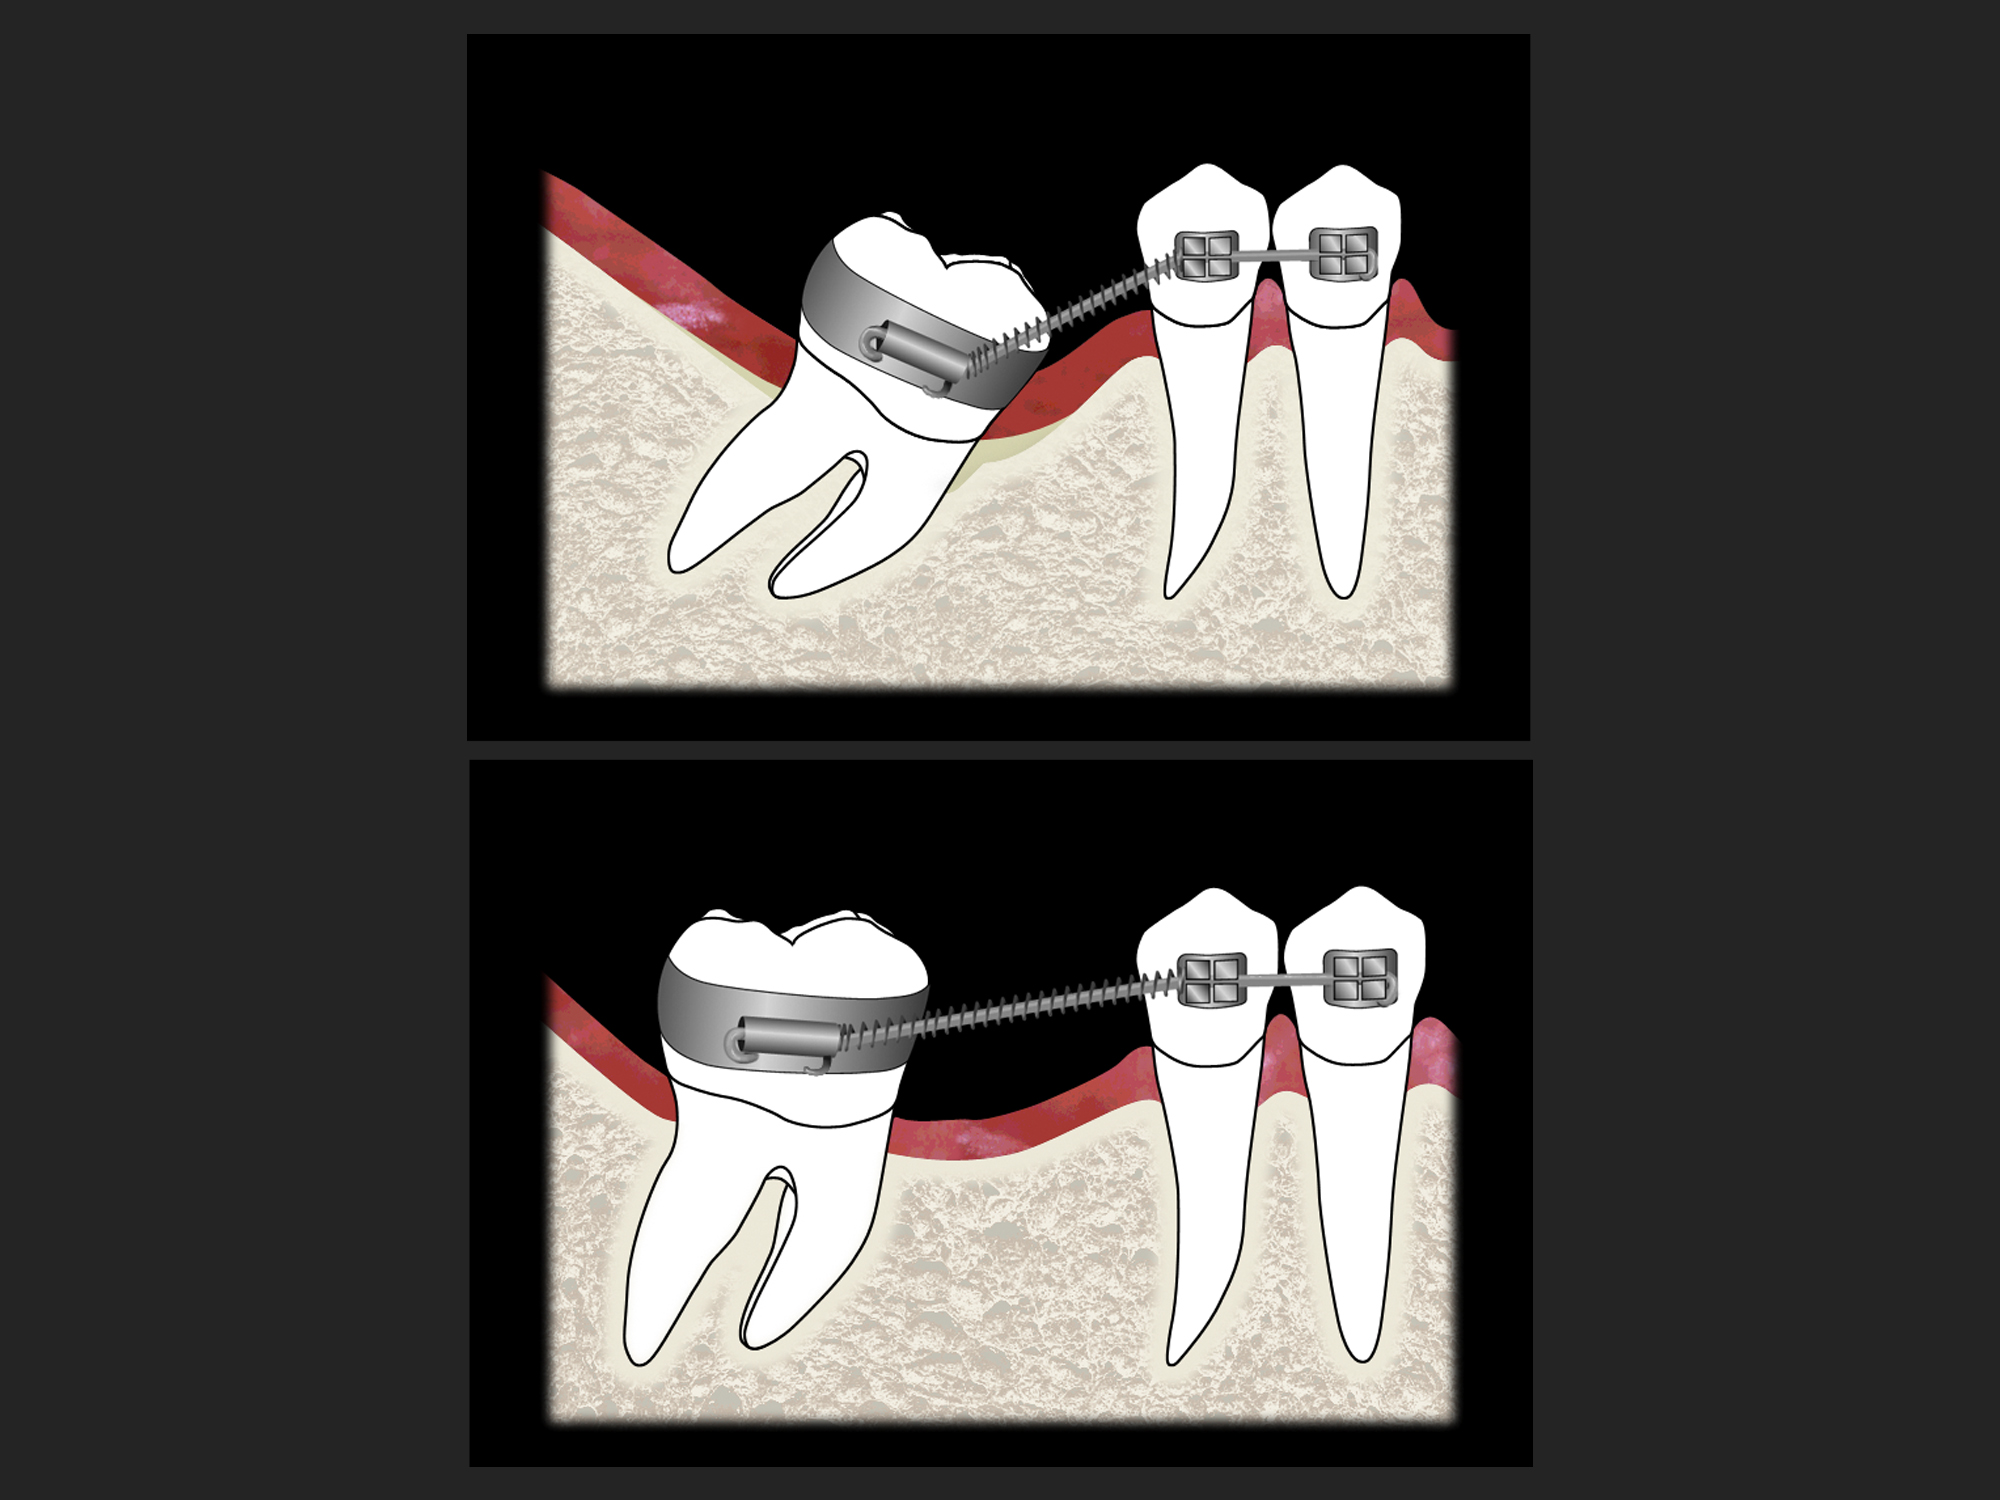 Uprighting a posterior molar: Photoshop slide illustration, 2005.